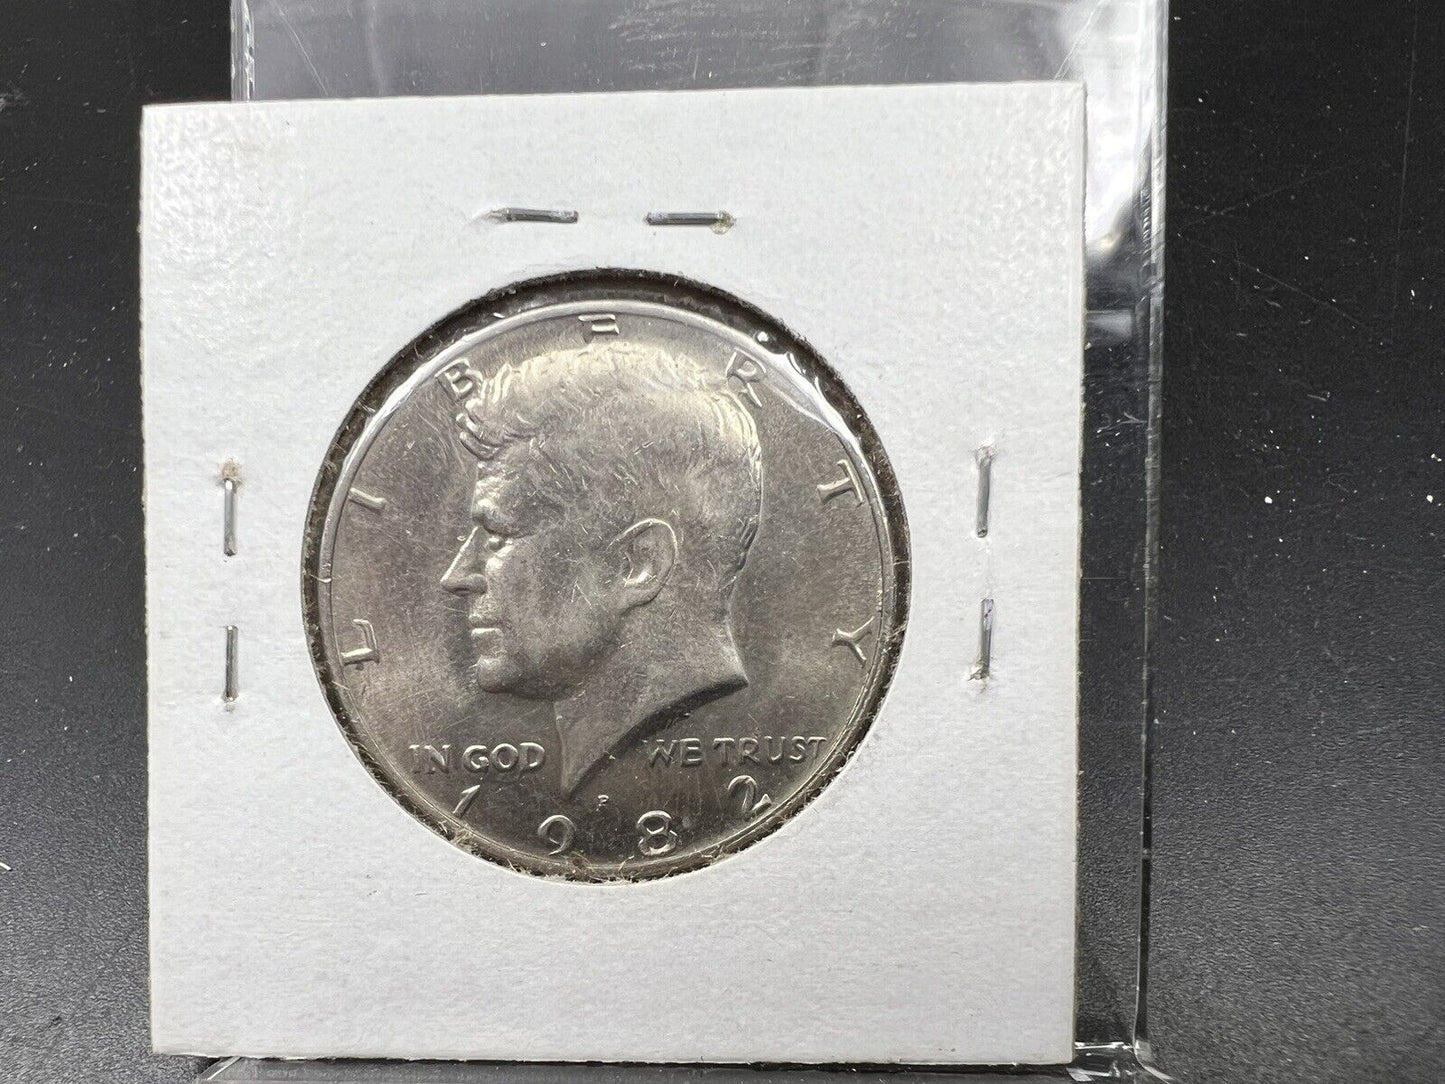 1982 P 50c Missing Designers Initials FG Error Coin Kennedy Half Dollar BU UNC